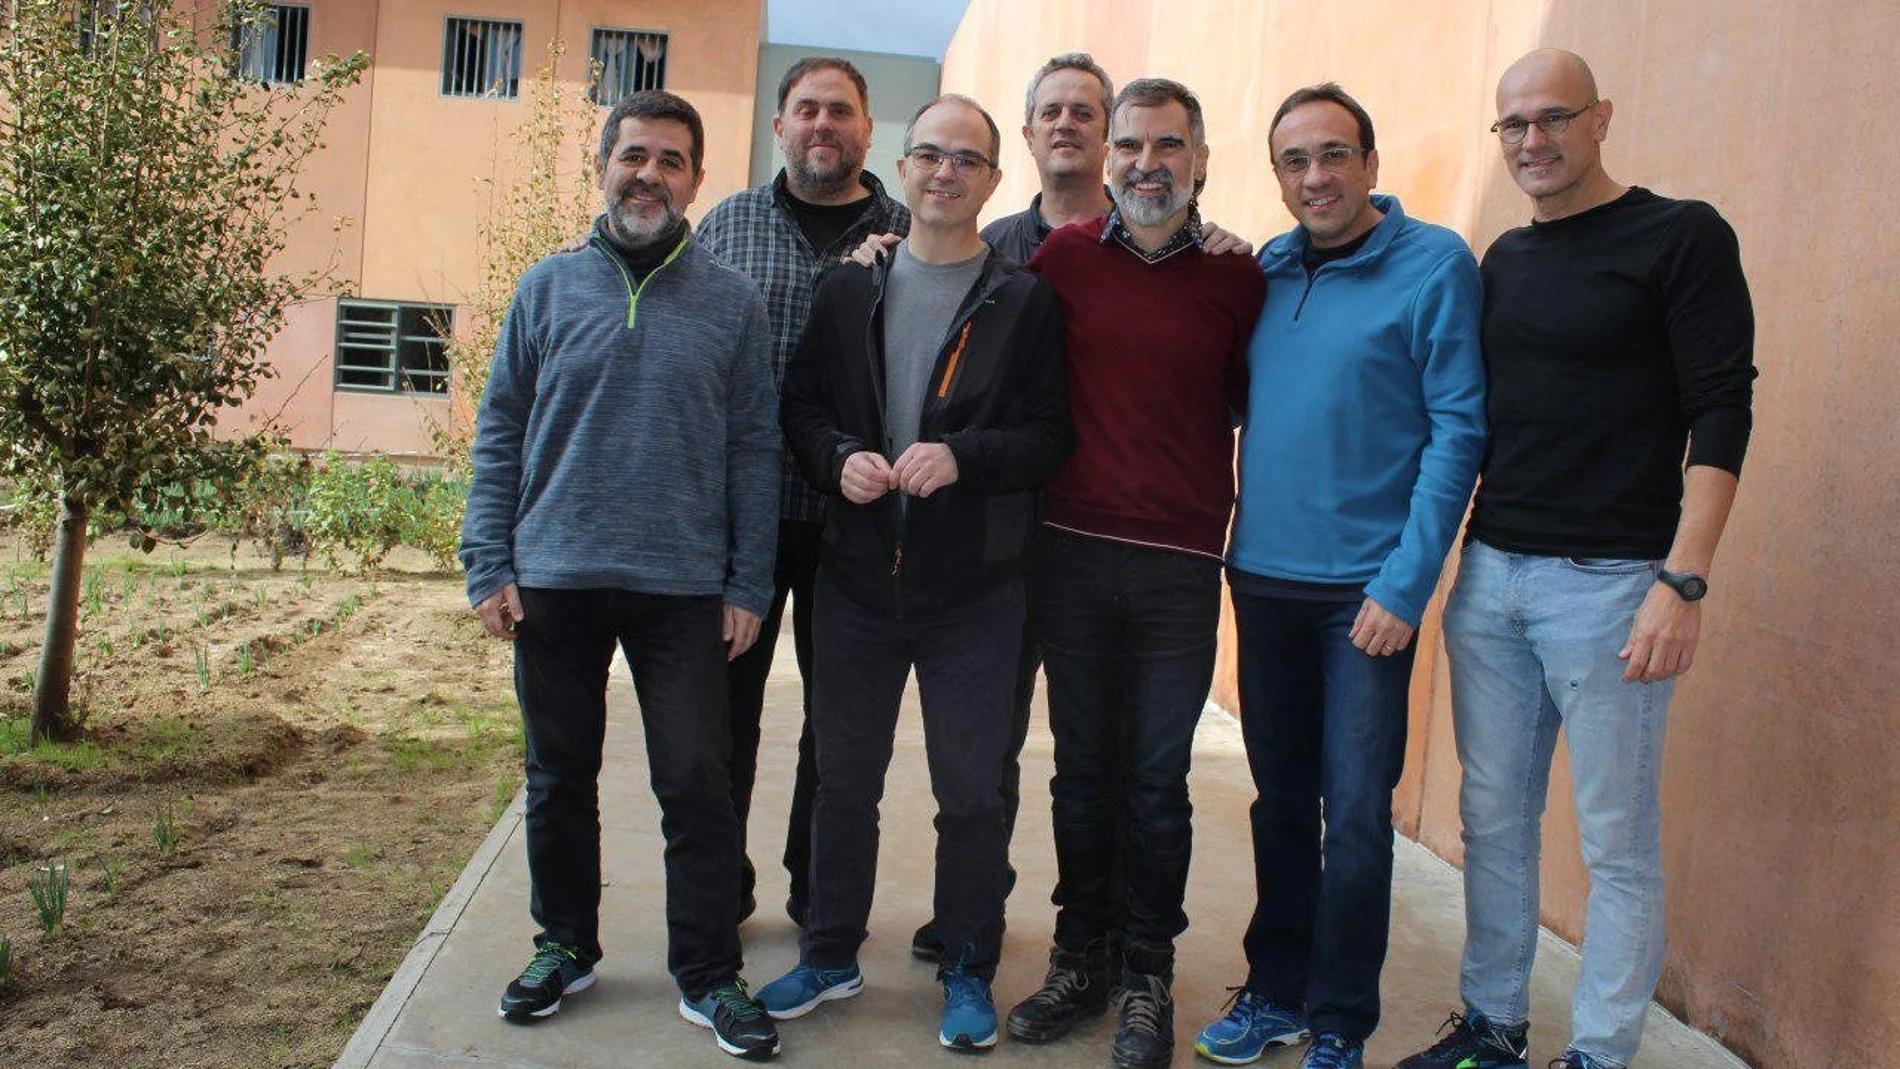 Imagen capturada de la cuenta oficial de Òmnium Cultural de Twitter de los siete dirigentes independentistas presos en la cárcel de Lledoners.